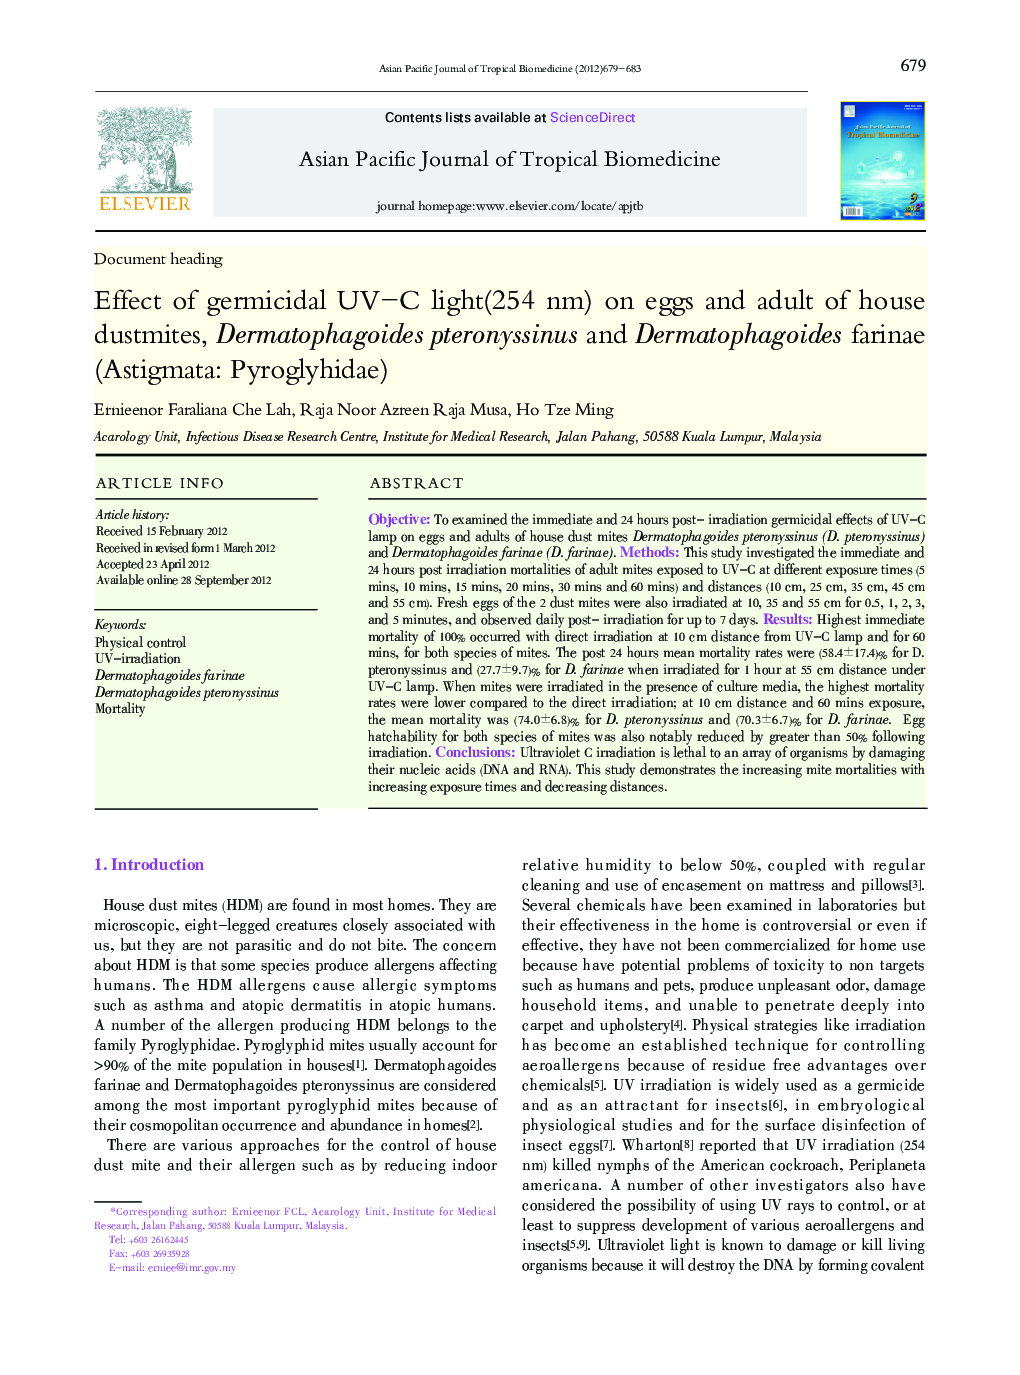 Effect of germicidal UV-C light(254 nm) on eggs and adult of house dustmites, Dermatophagoides pteronyssinus and Dermatophagoides farinae (Astigmata: Pyroglyhidae)